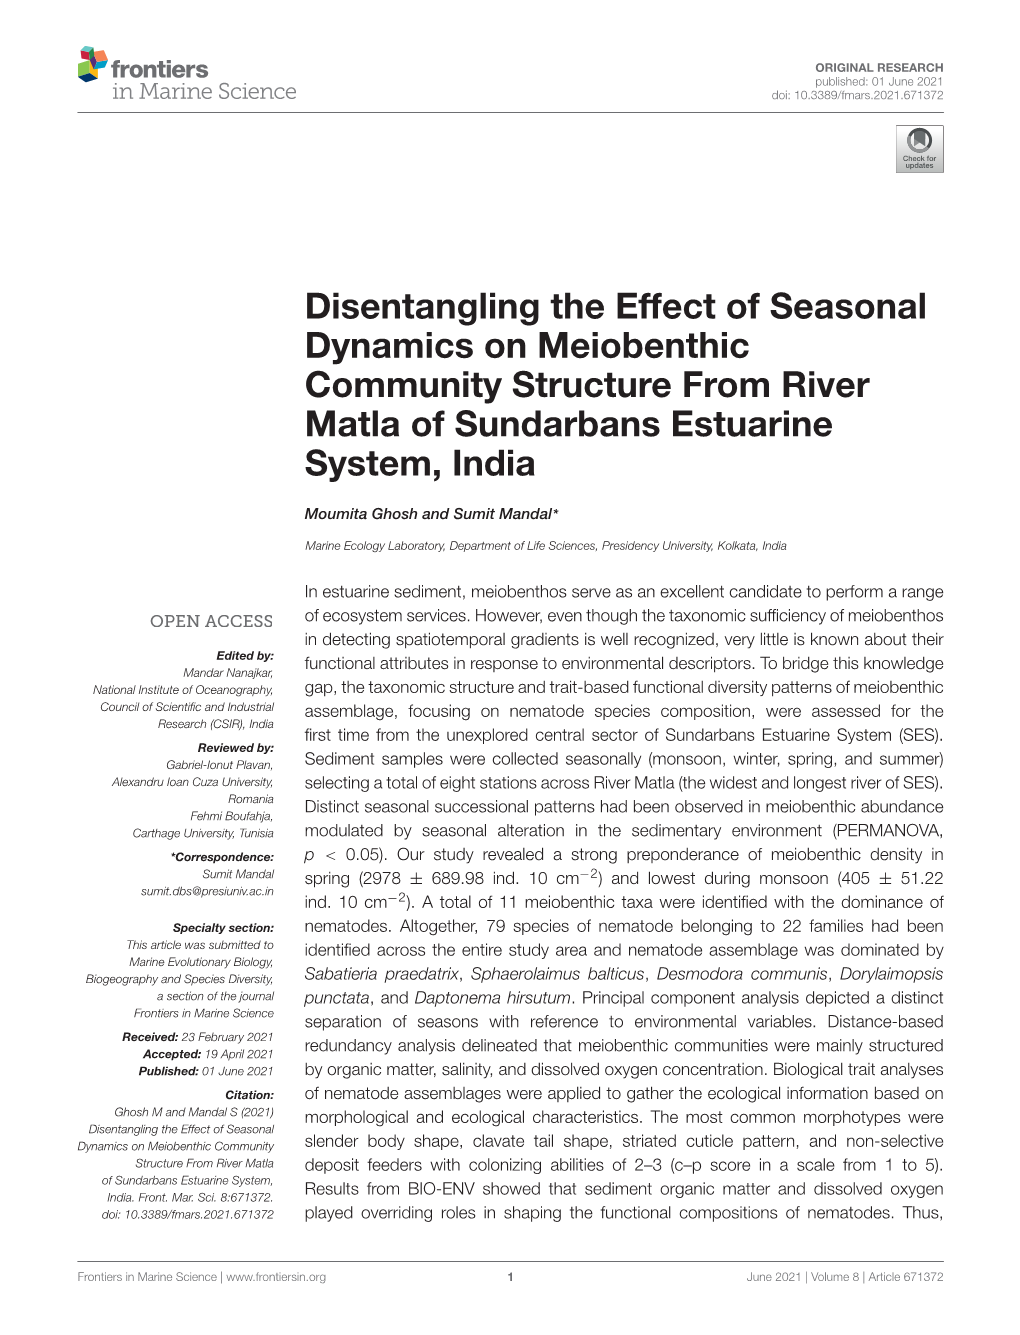 Disentangling the Effect of Seasonal Dynamics on Meiobenthic Community Structure from River Matla of Sundarbans Estuarine System, India